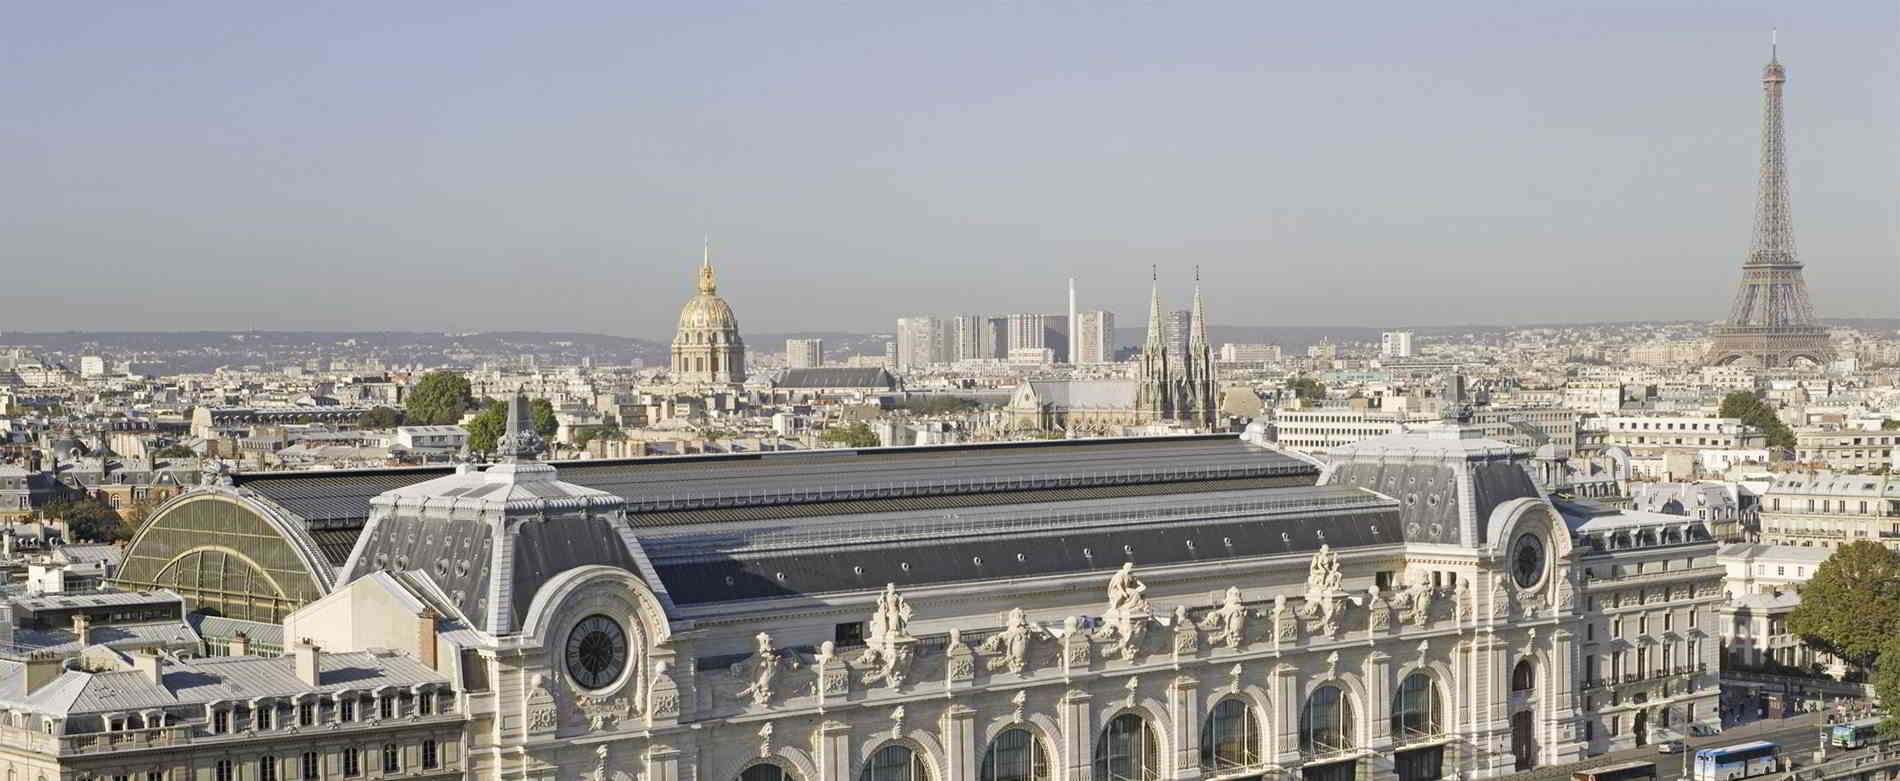 paris rooftop high view